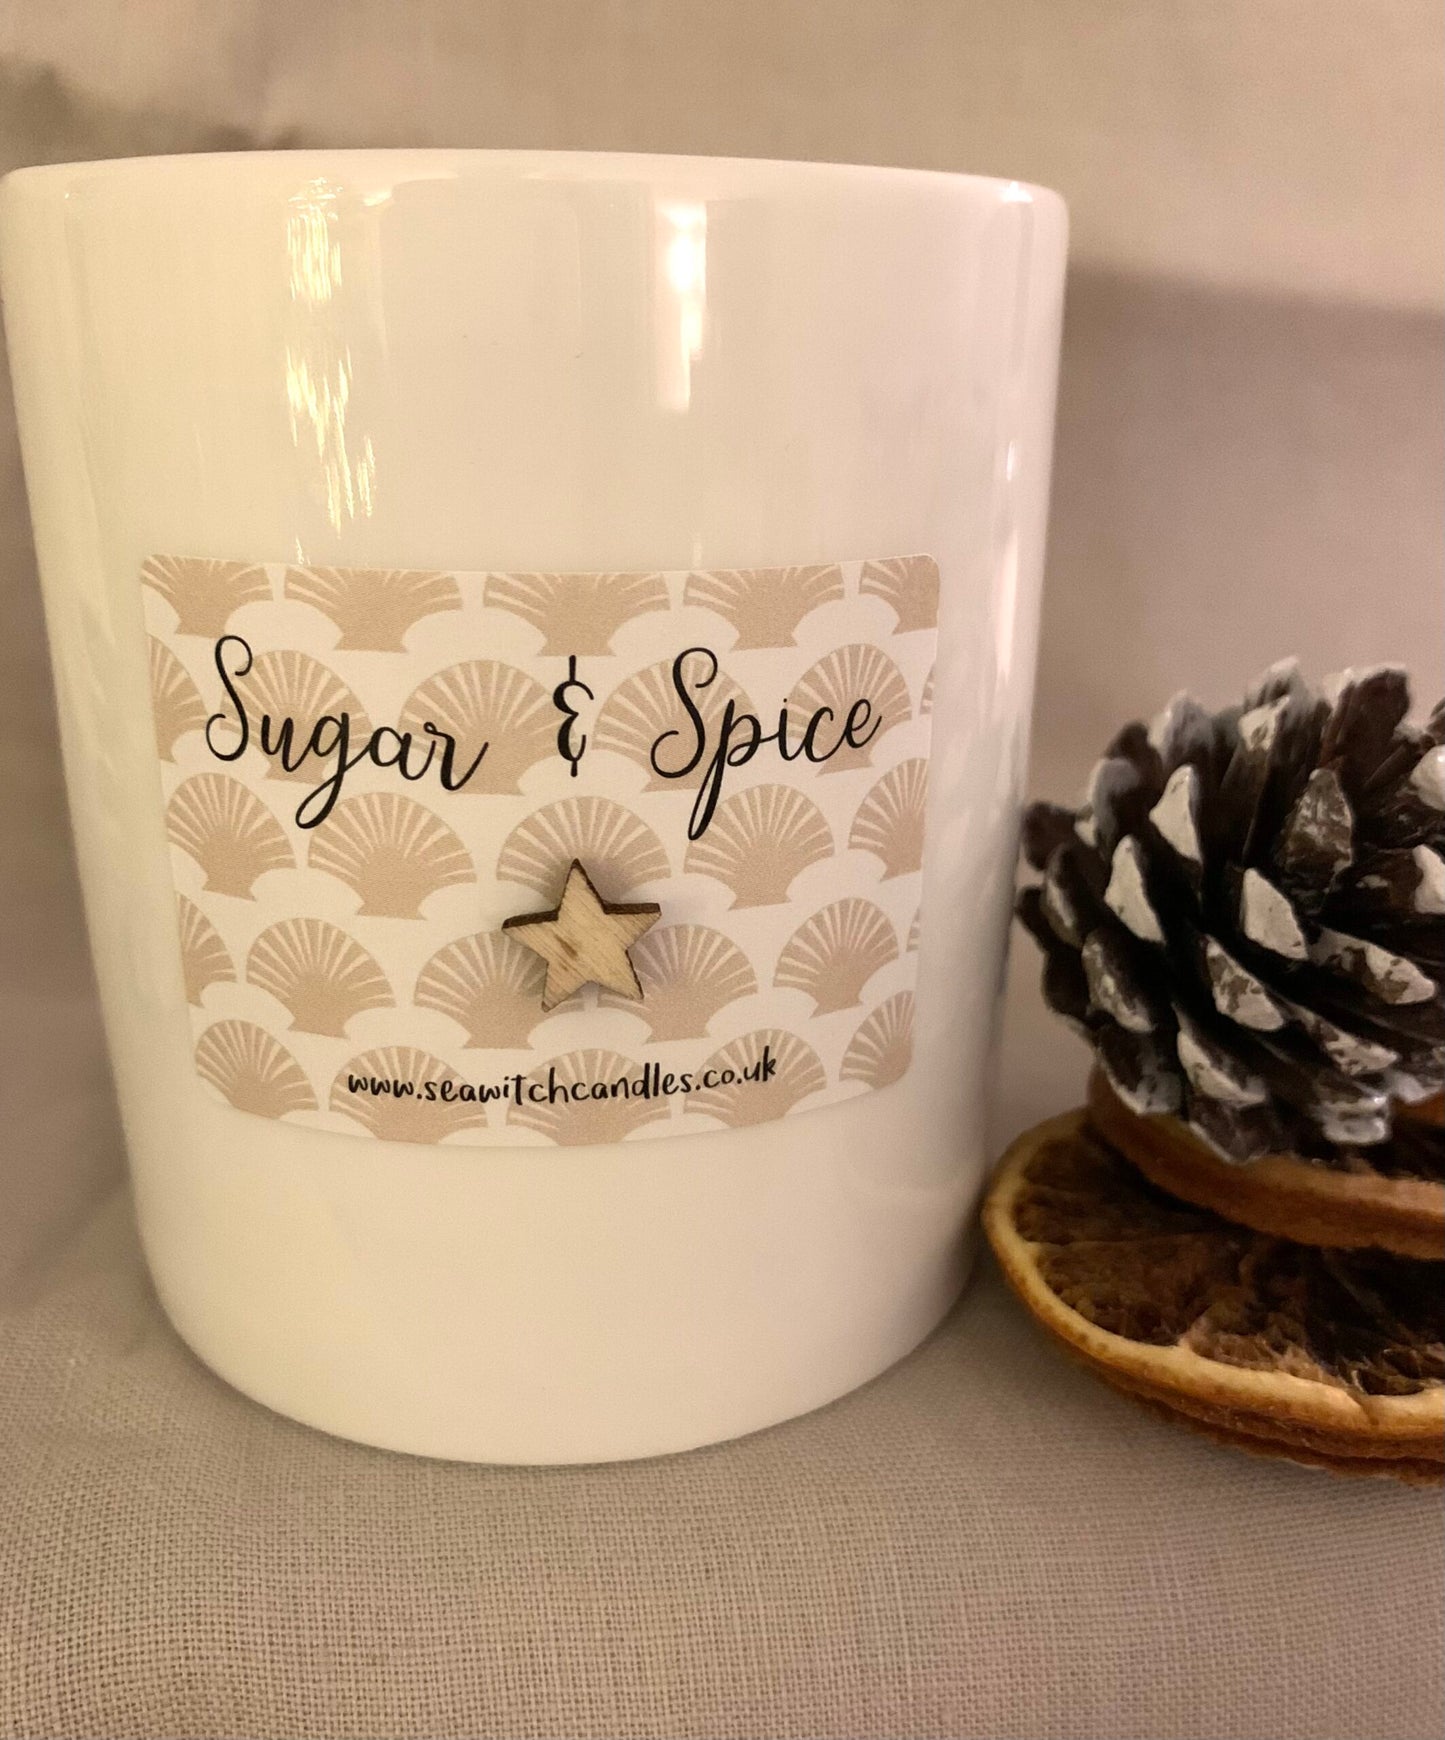 Sugar & Spice Soy Wax Candle - handmade in Cornwall